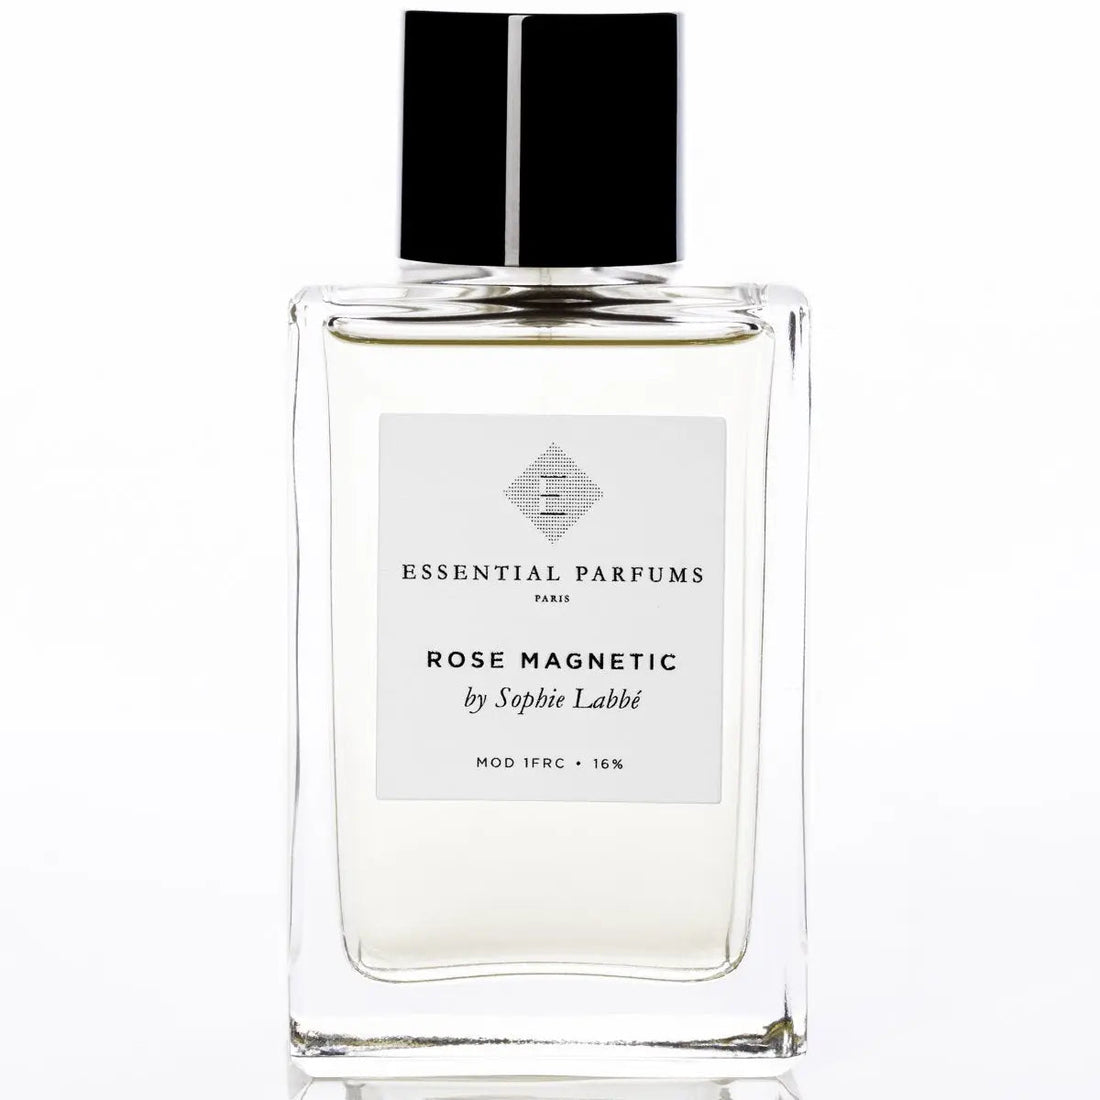 Essential parfums 玫瑰磁力香水 - 100 毫升